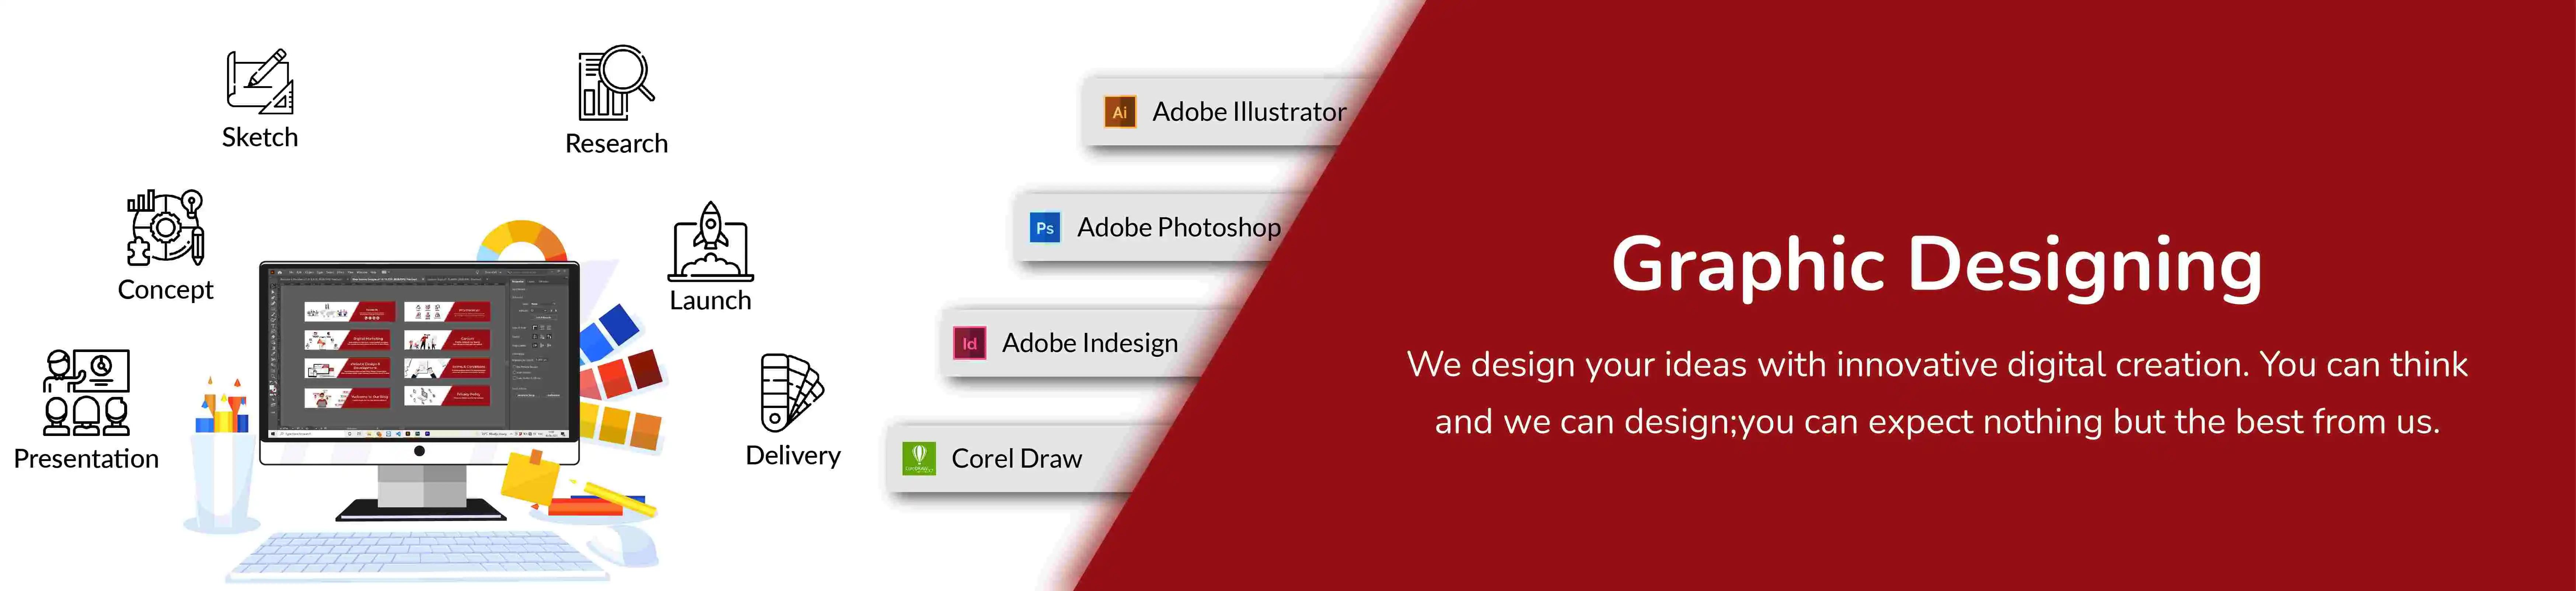 graphics-design-banner